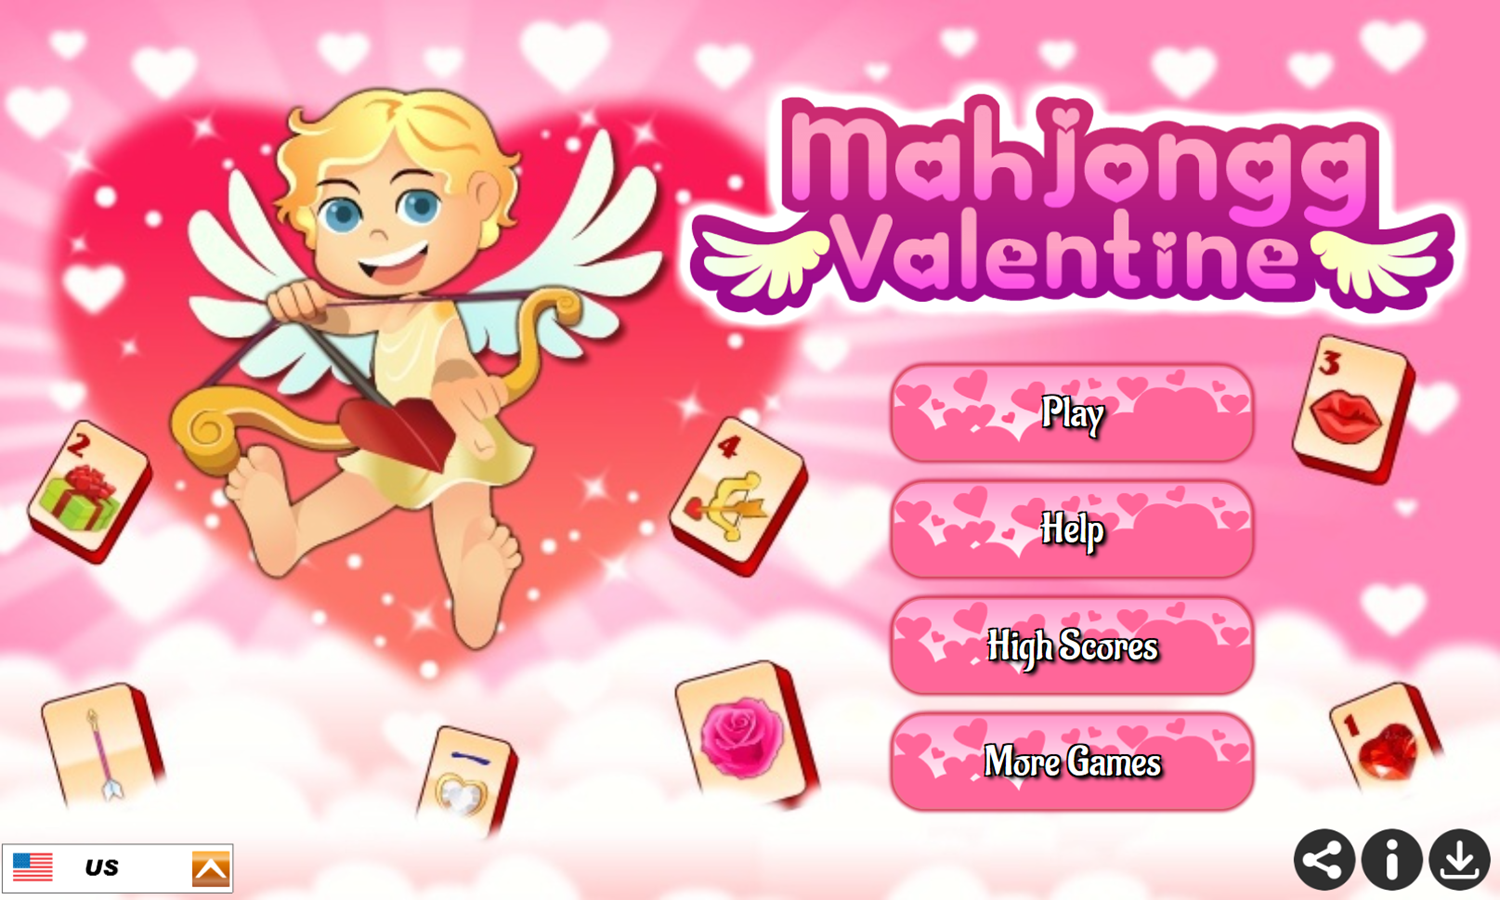 Mahjongg Valentine Game Welcome Screen Screenshot.